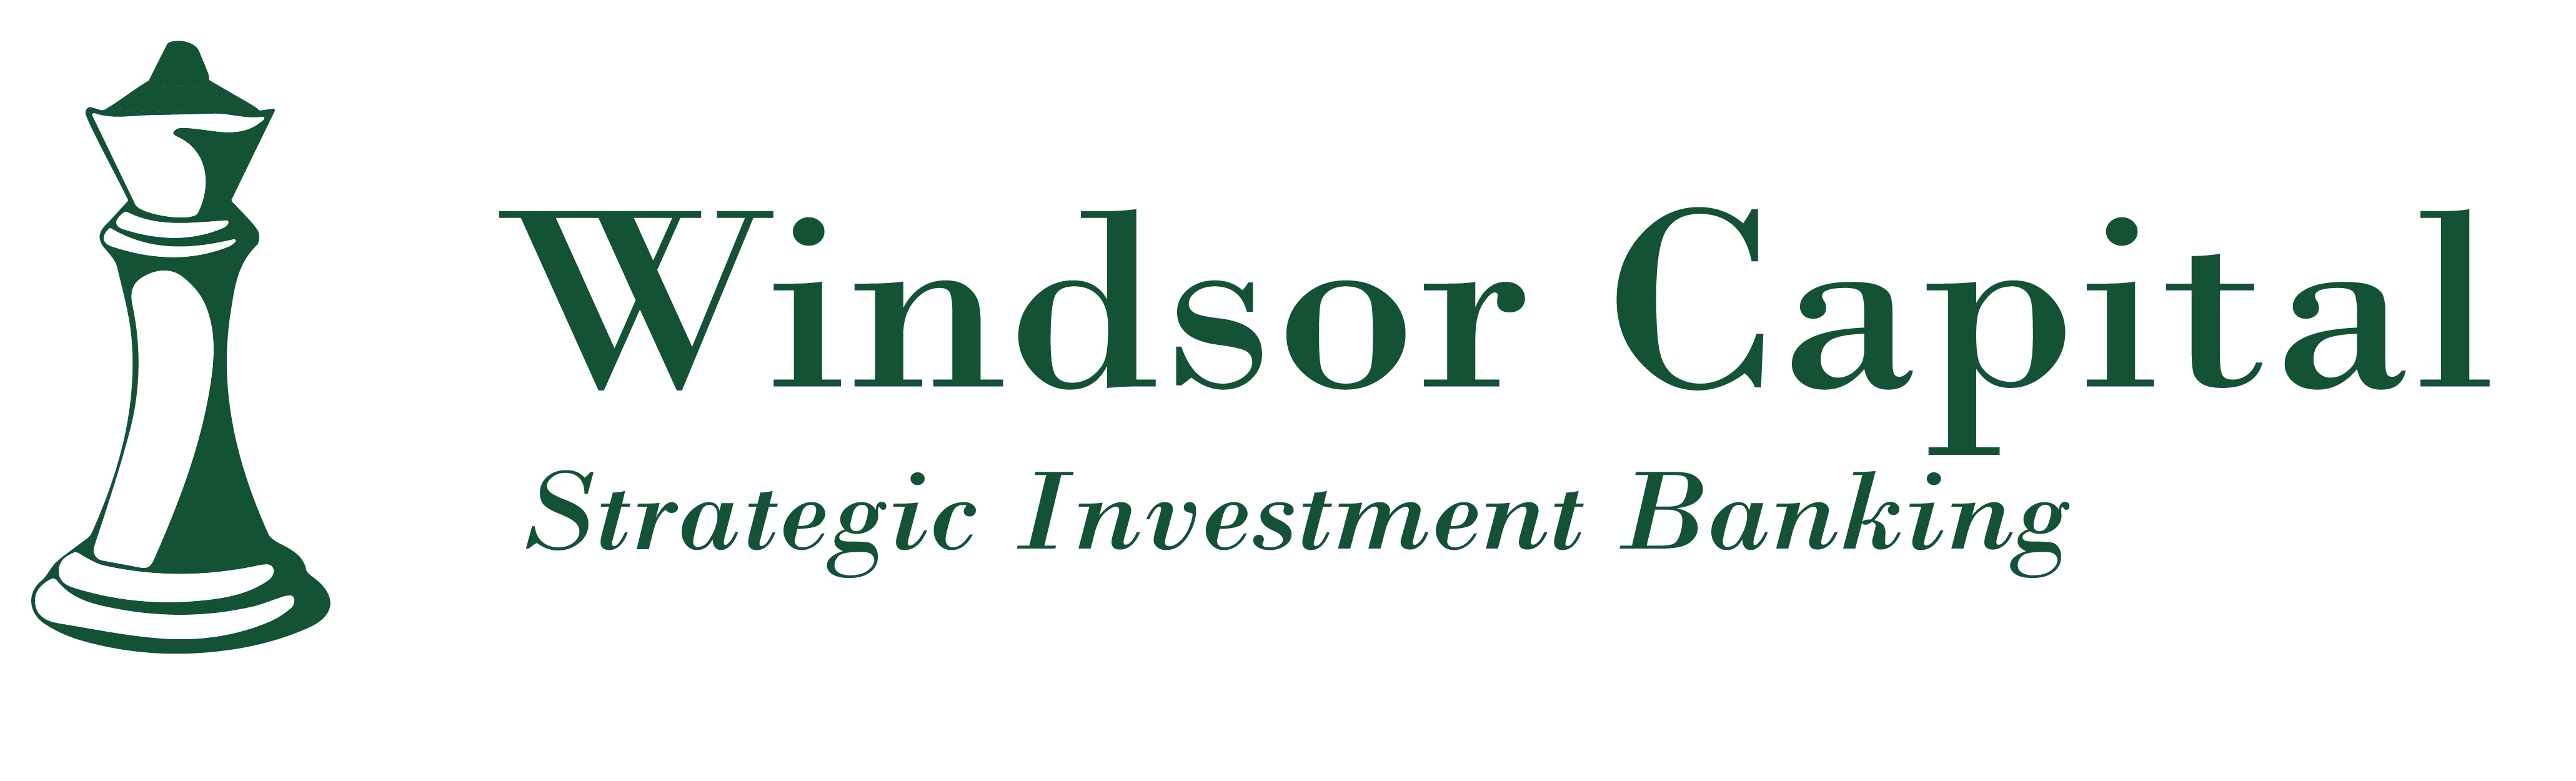 windsor-capital-logo